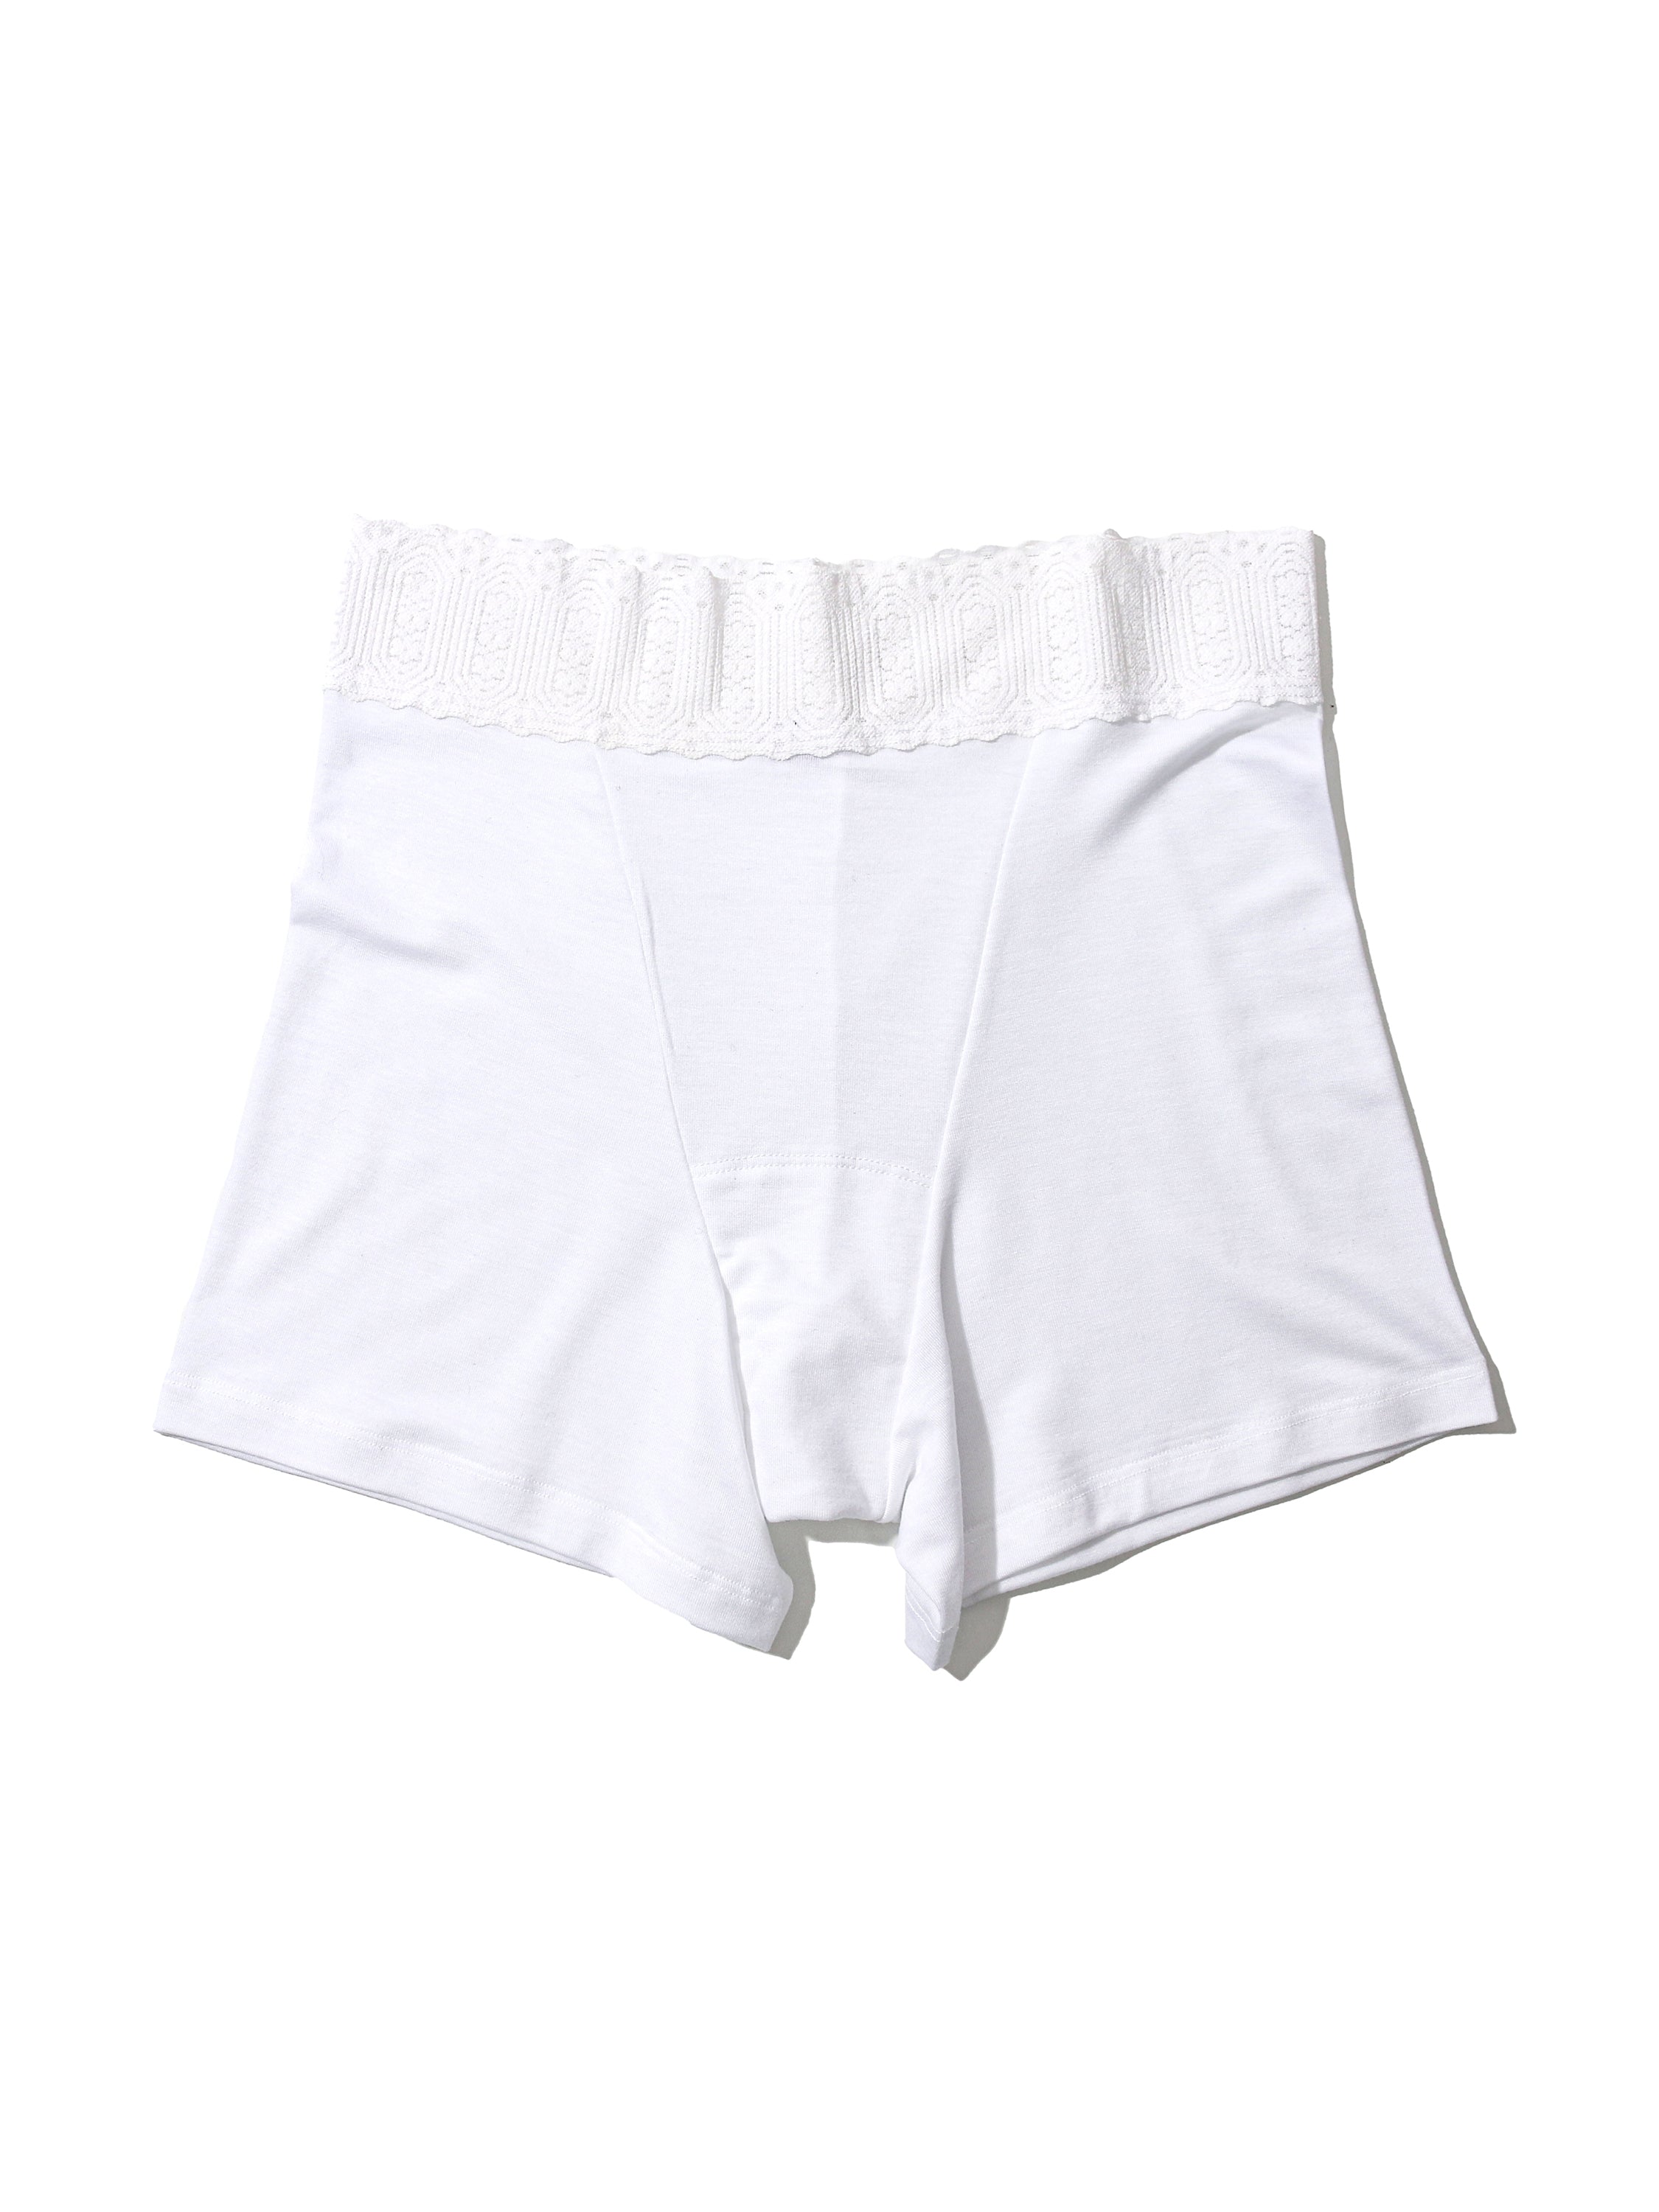 Full Cotton Comfortable Men's Underwear Cute Cartoon Pattern